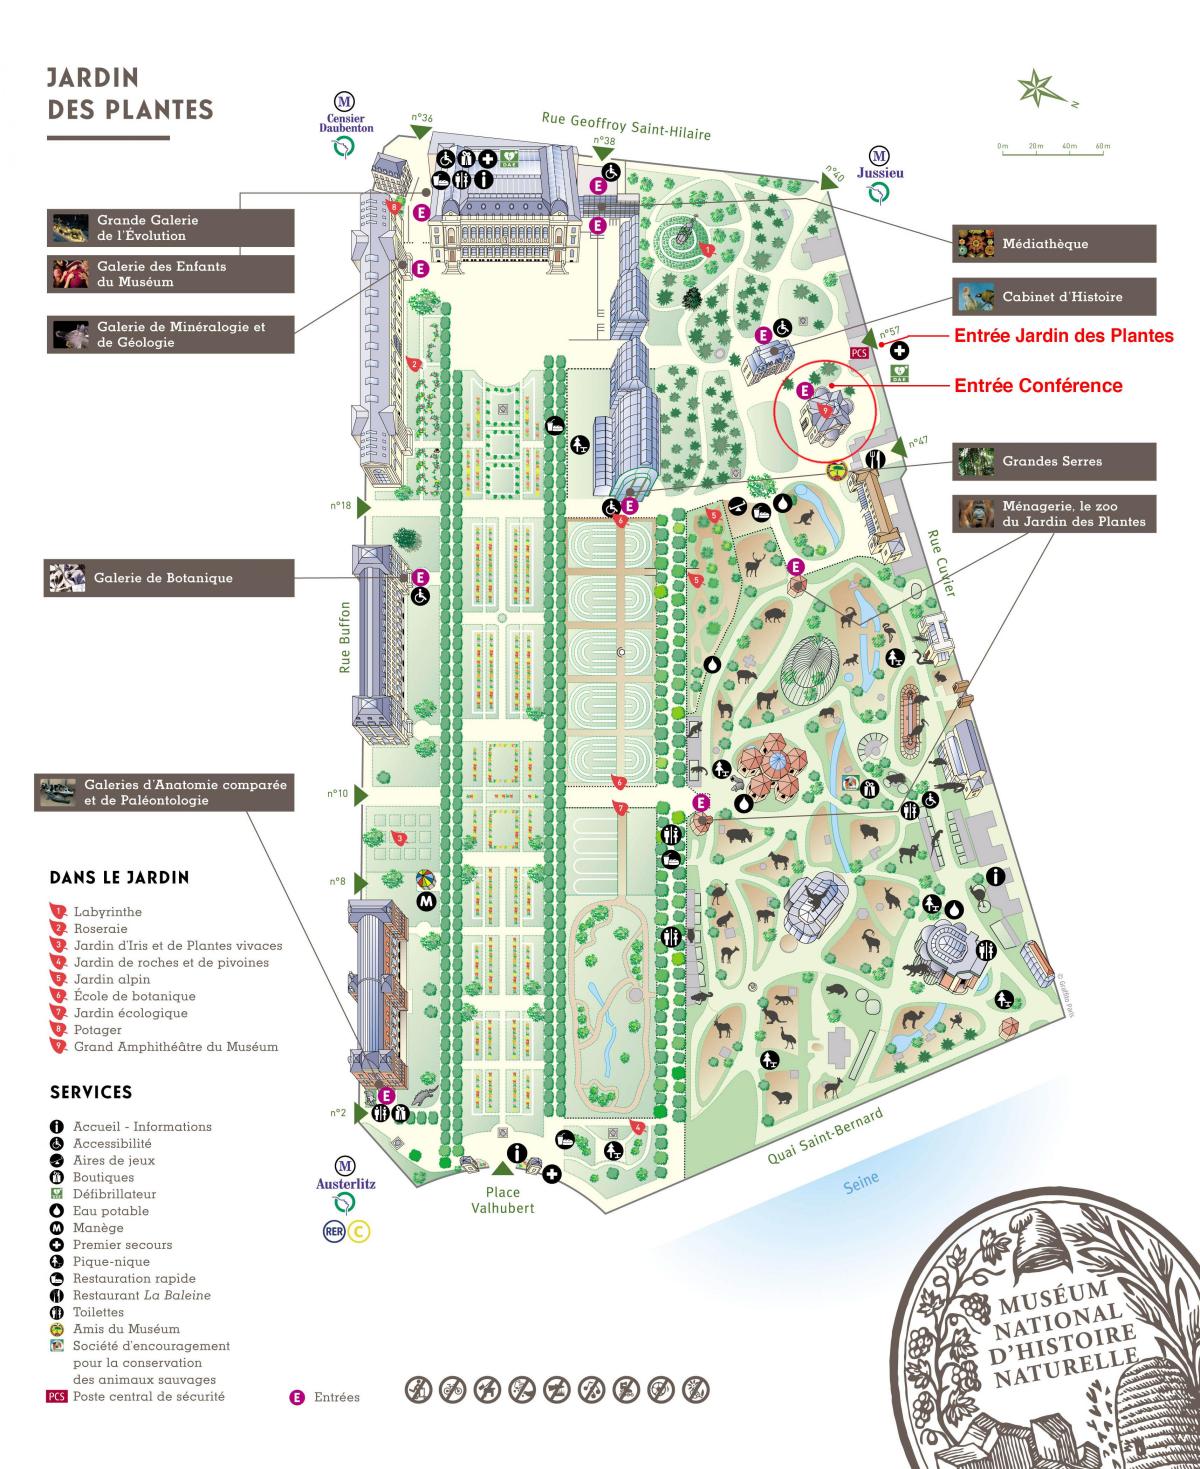 Map of The Jardin des Plantes